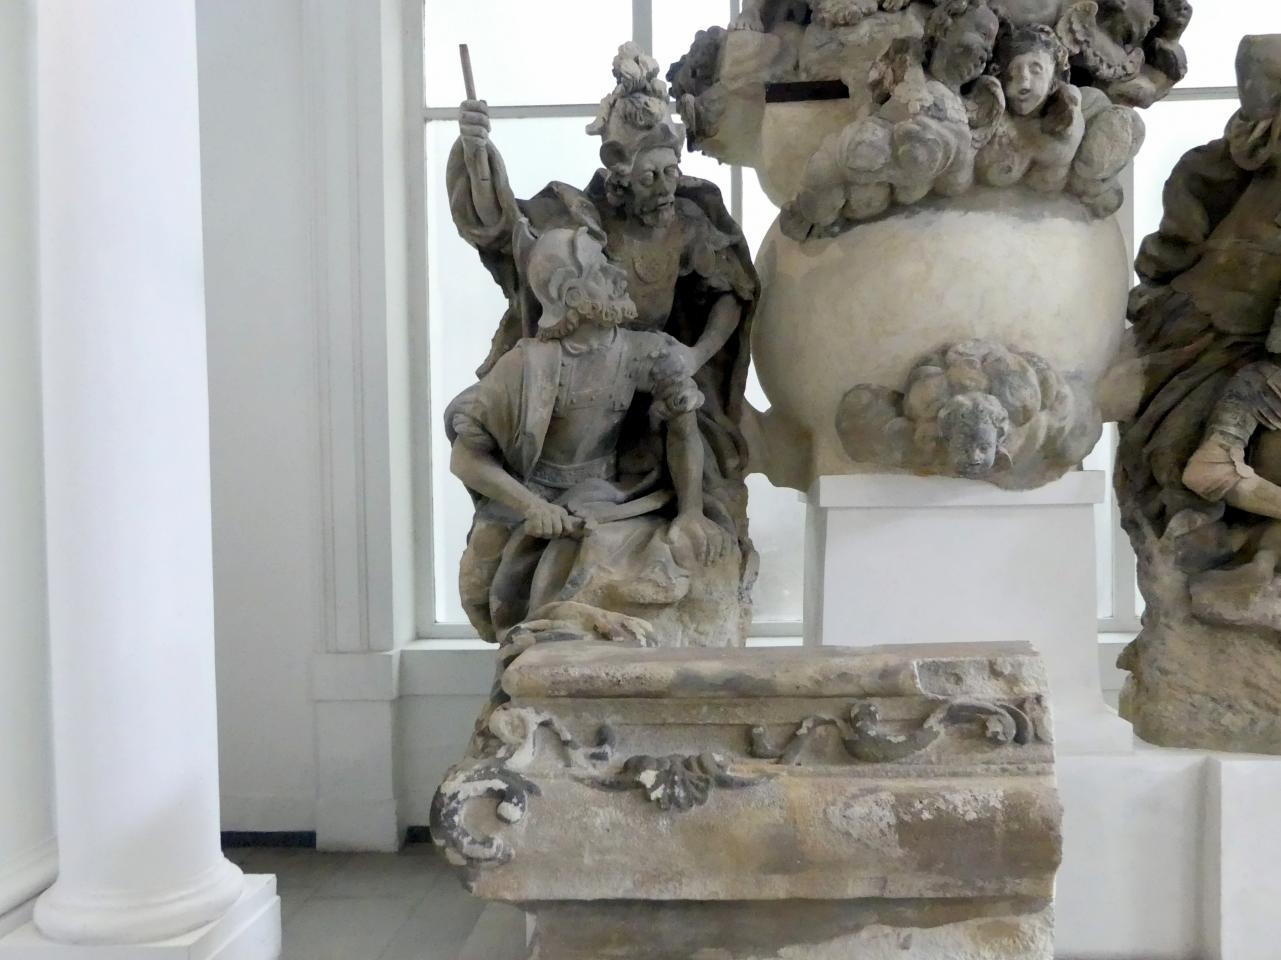 Johann Michael Brüderle (1739–1740), Skulptur der Auferstehung Christi, Prag-Hradschin, Prager Loreto, ehem. Kapuzinerkloster, jetzt Prag-Holešovice, Lapidarium, Saal 4, 1740, Bild 4/4